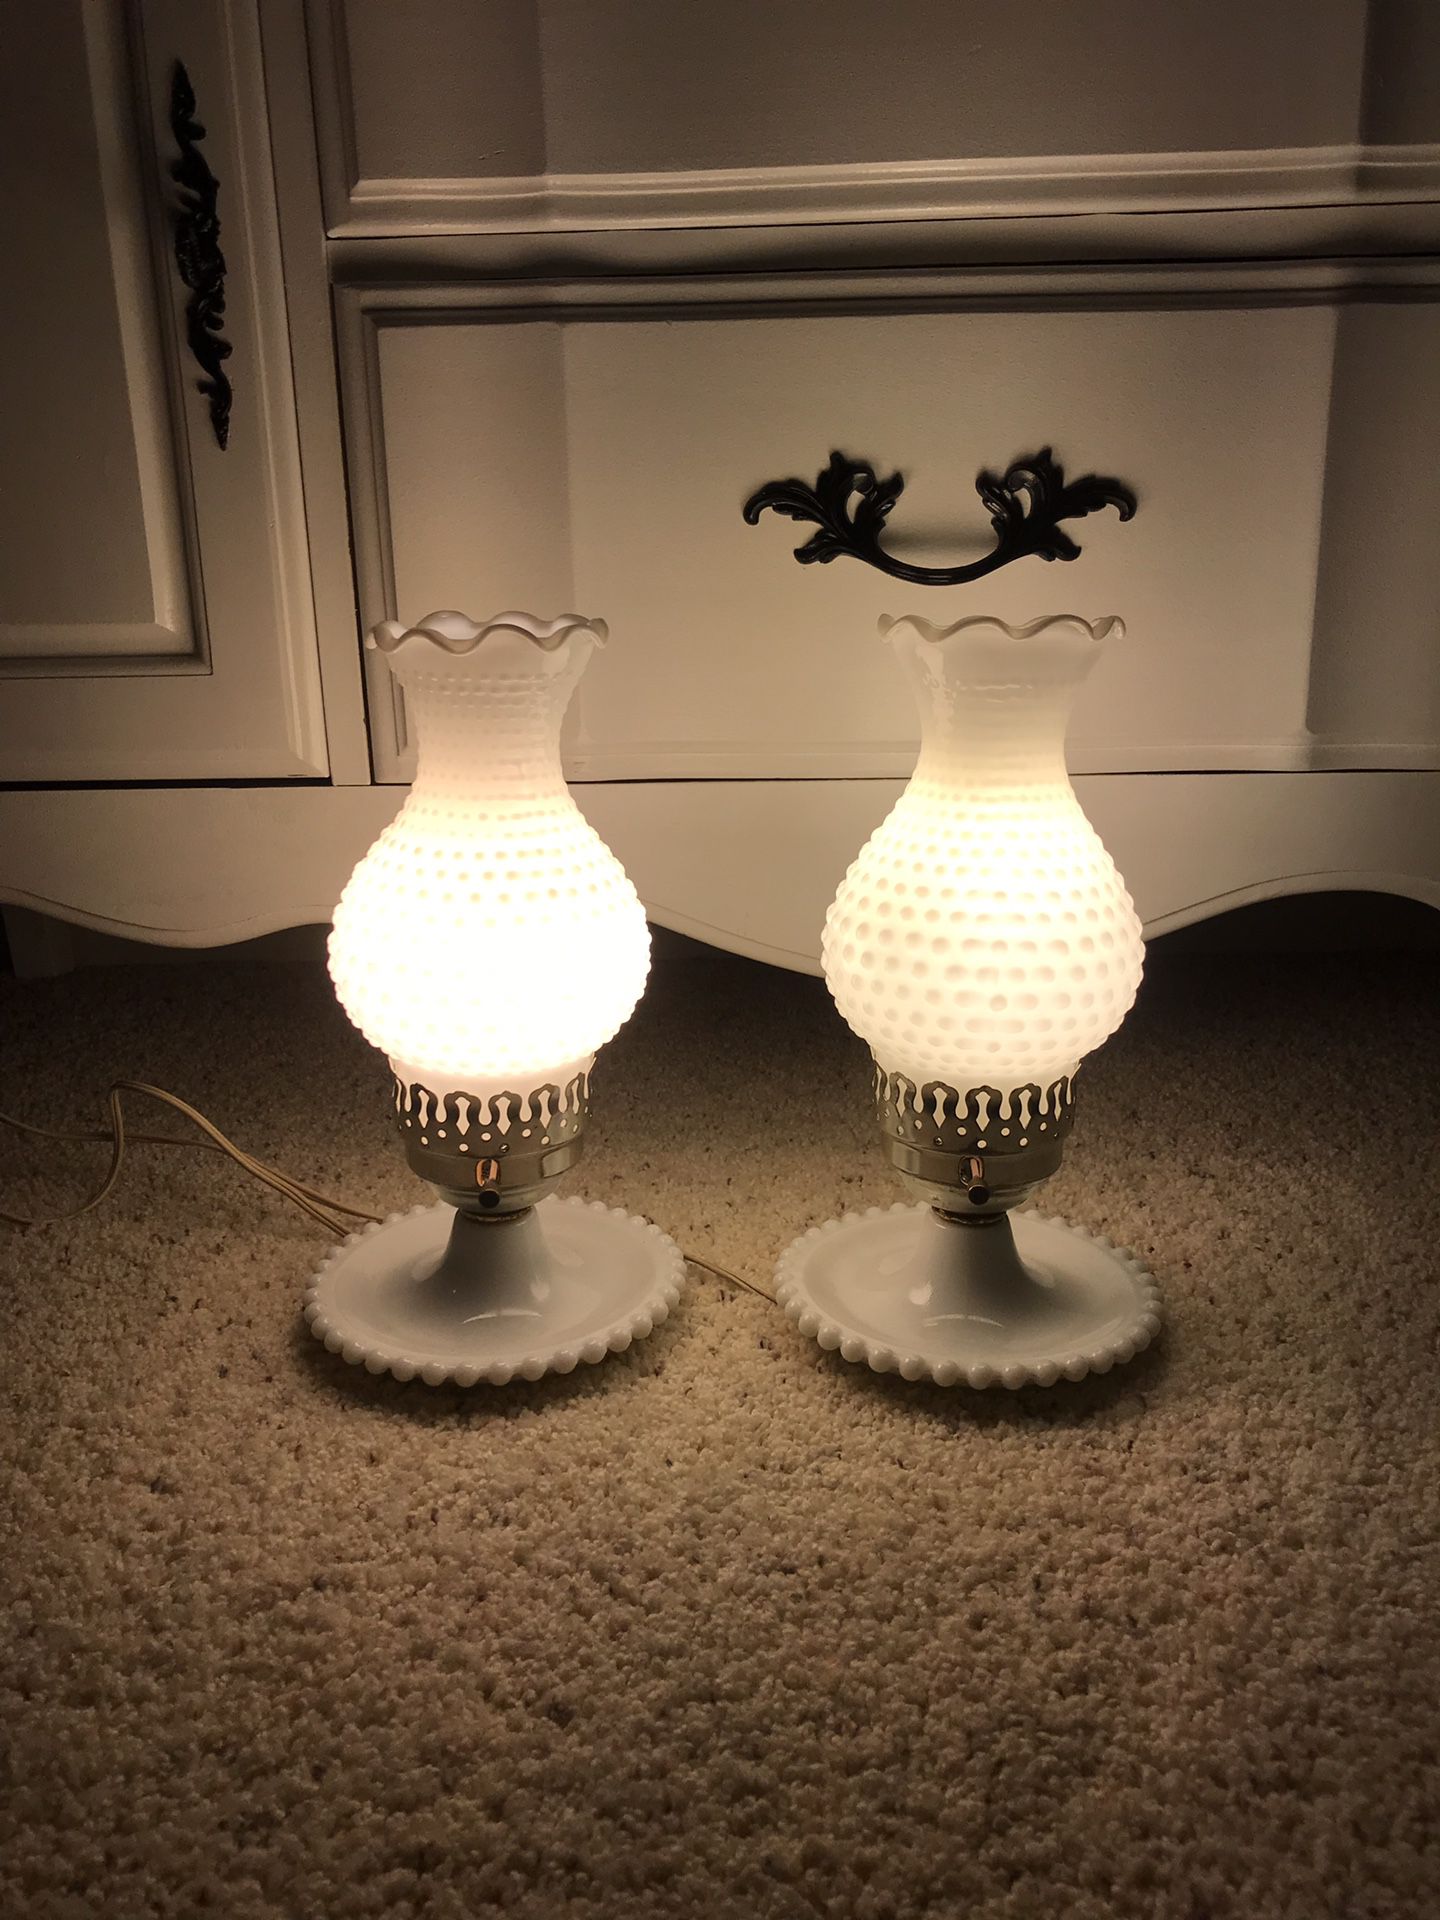 Beautiful milk glass lamps!